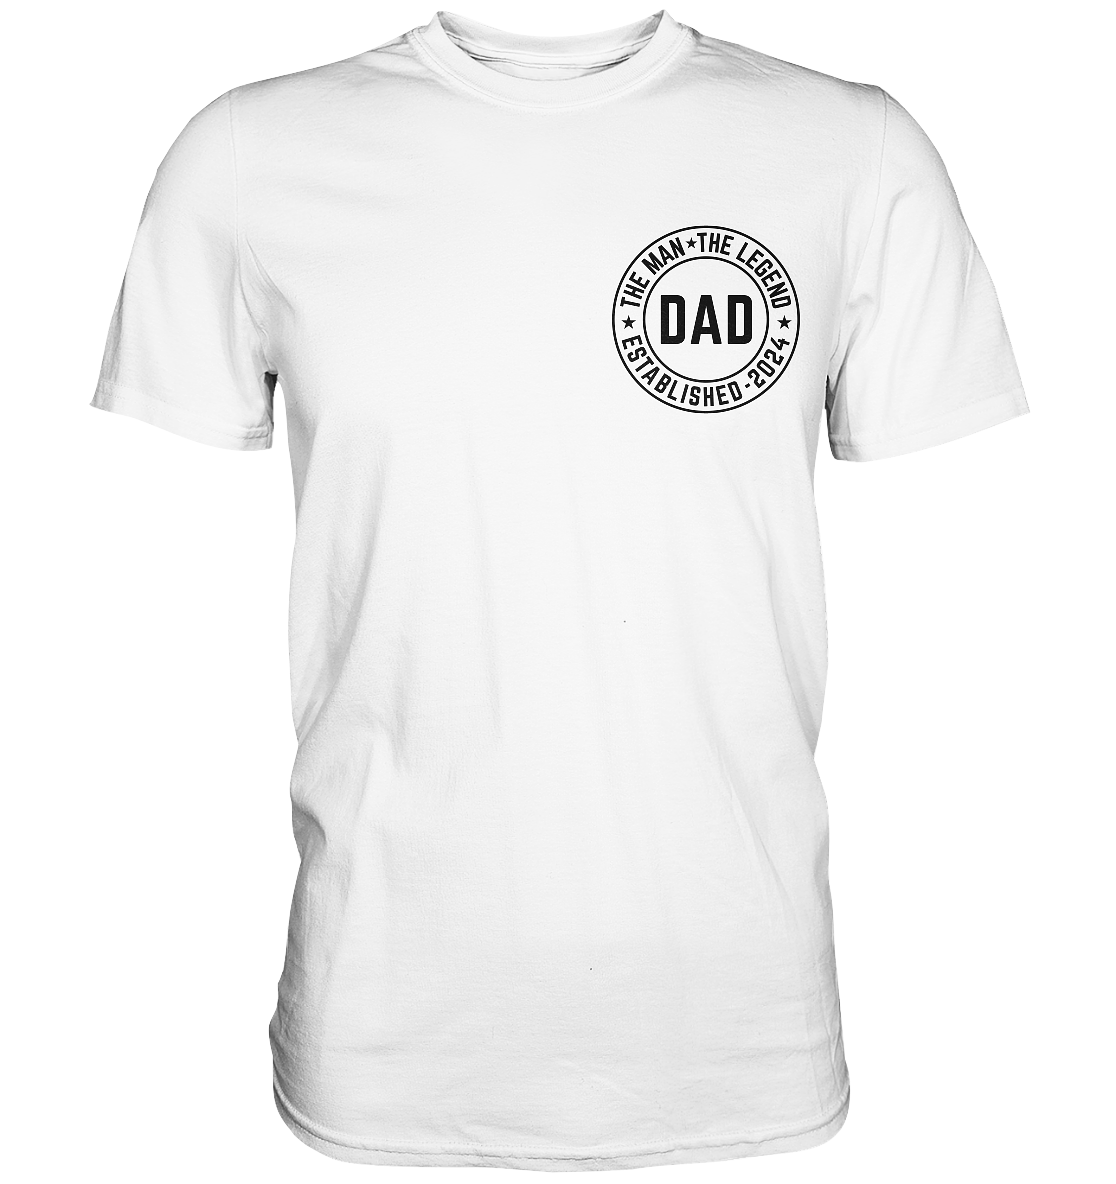 The Man, The Legend - DAD, versch. Farben - Premium Shirt